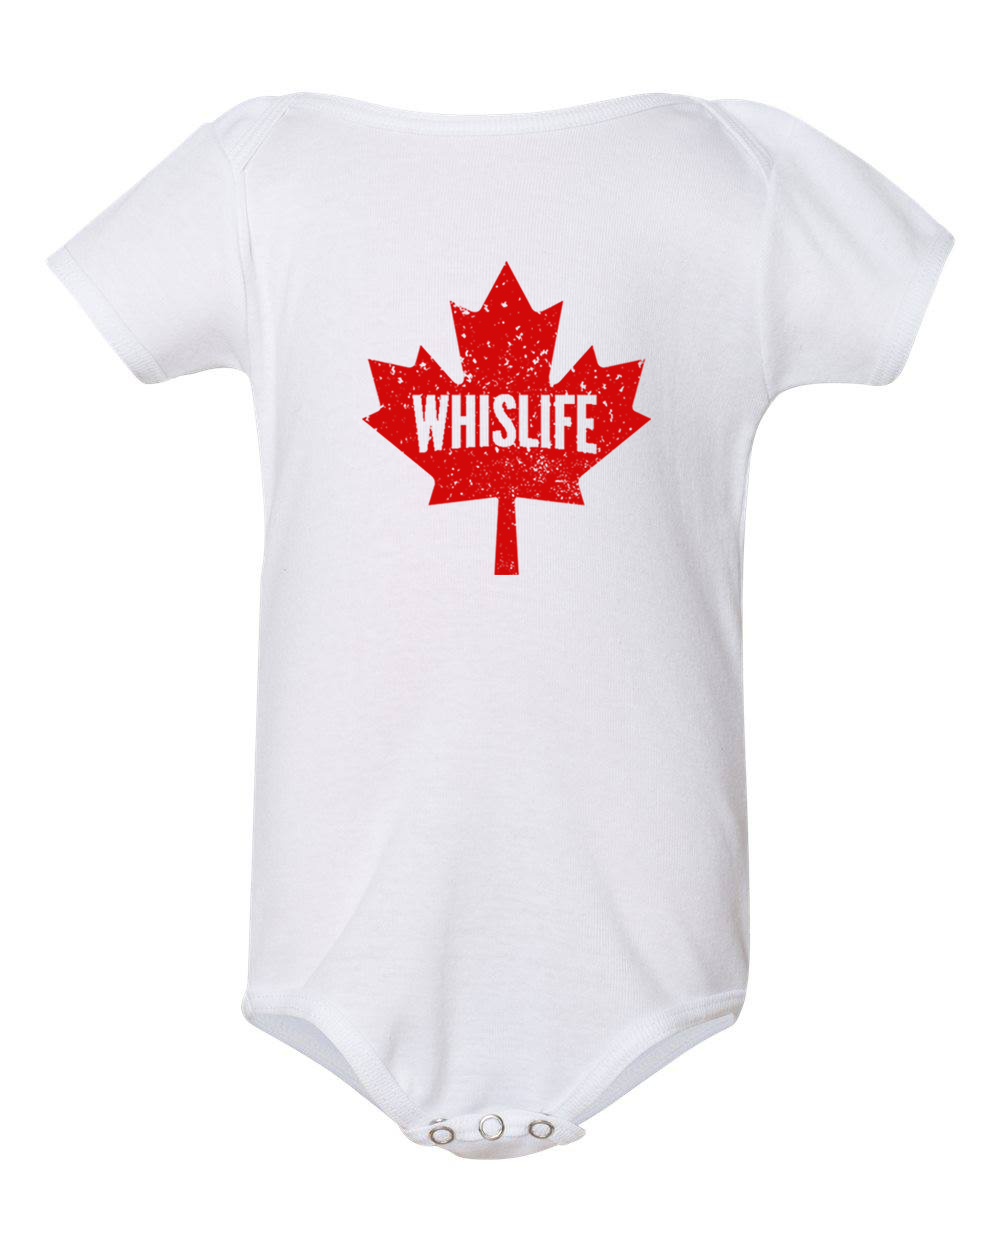 Baby Onesie - Maple Leaf Logo